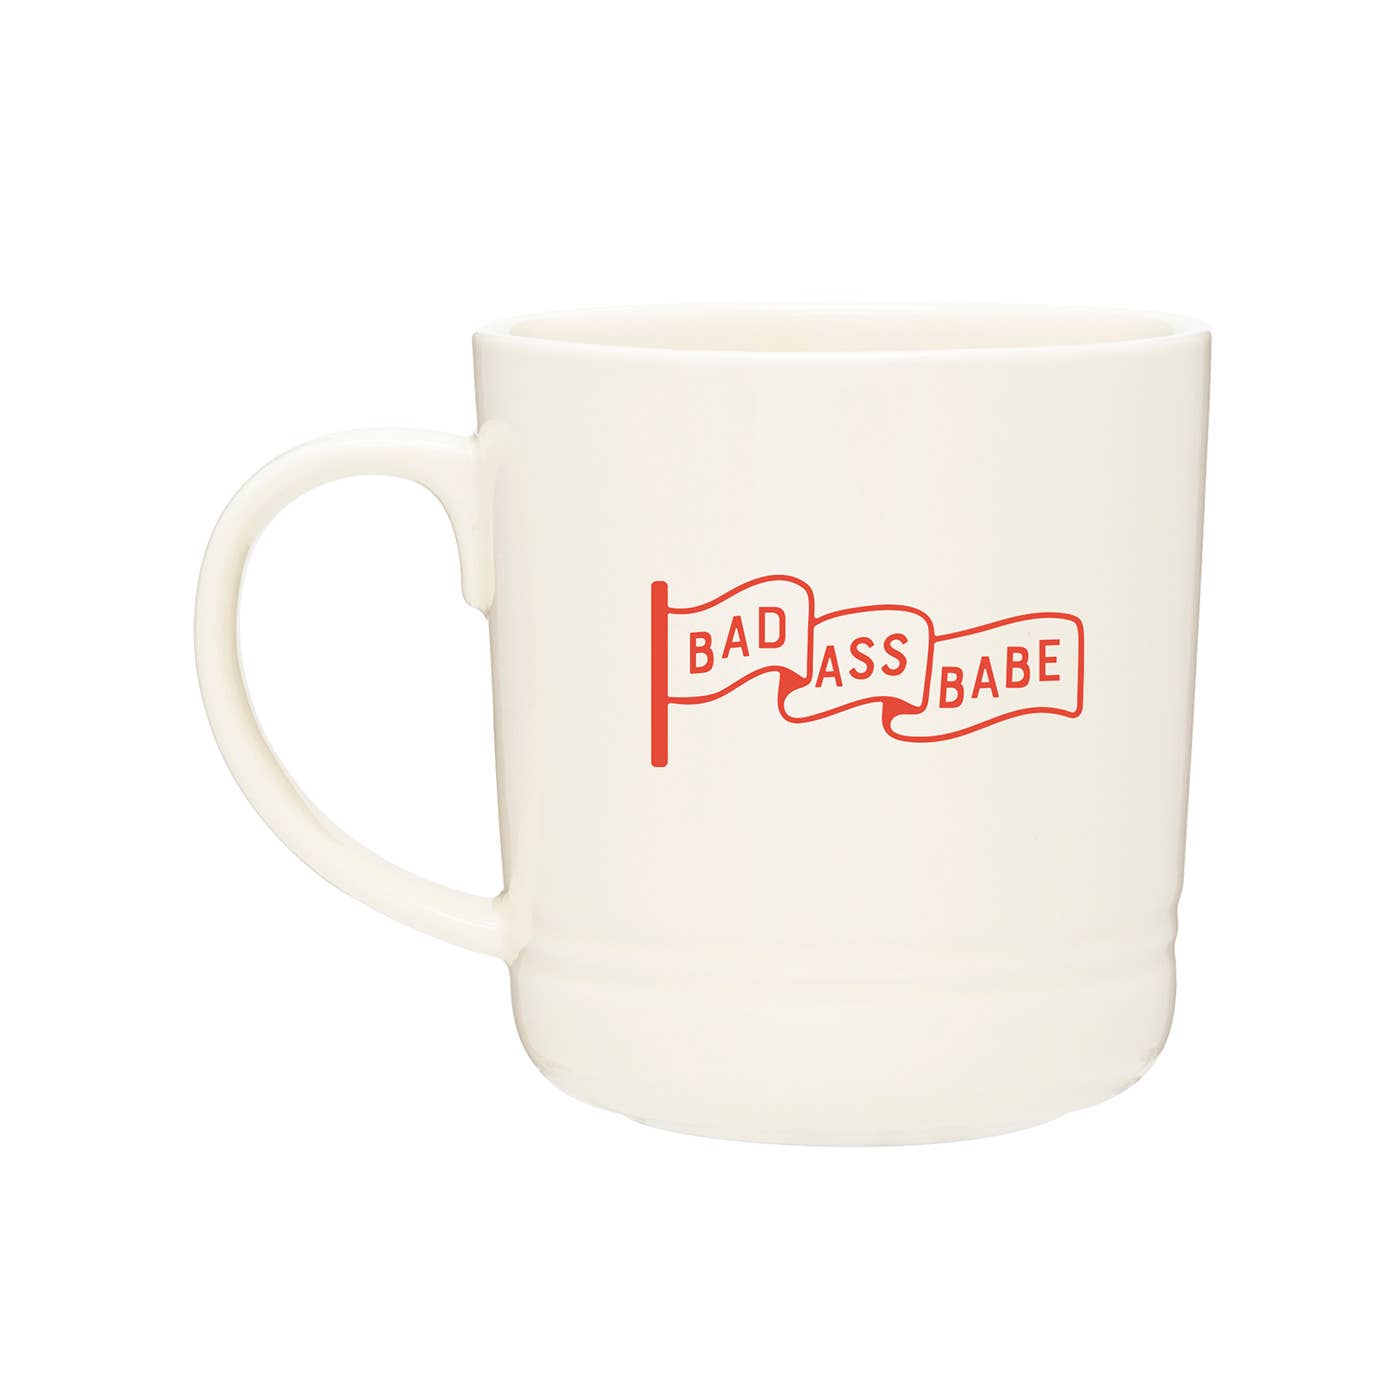 Ruff House Print Shop - Badass Babe Ceramic Coffee Mug